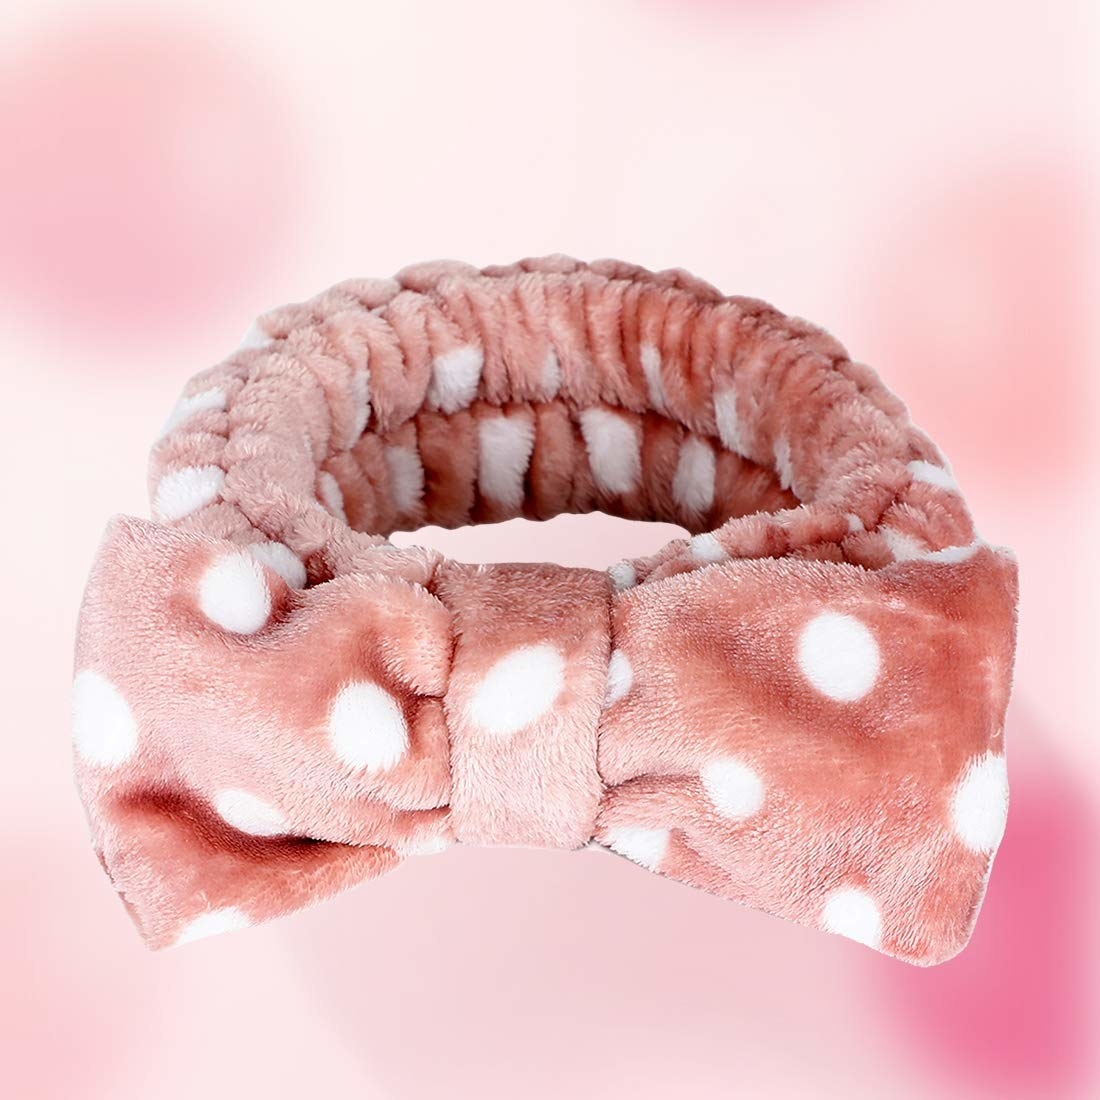 A pink headband with a white polka dot design